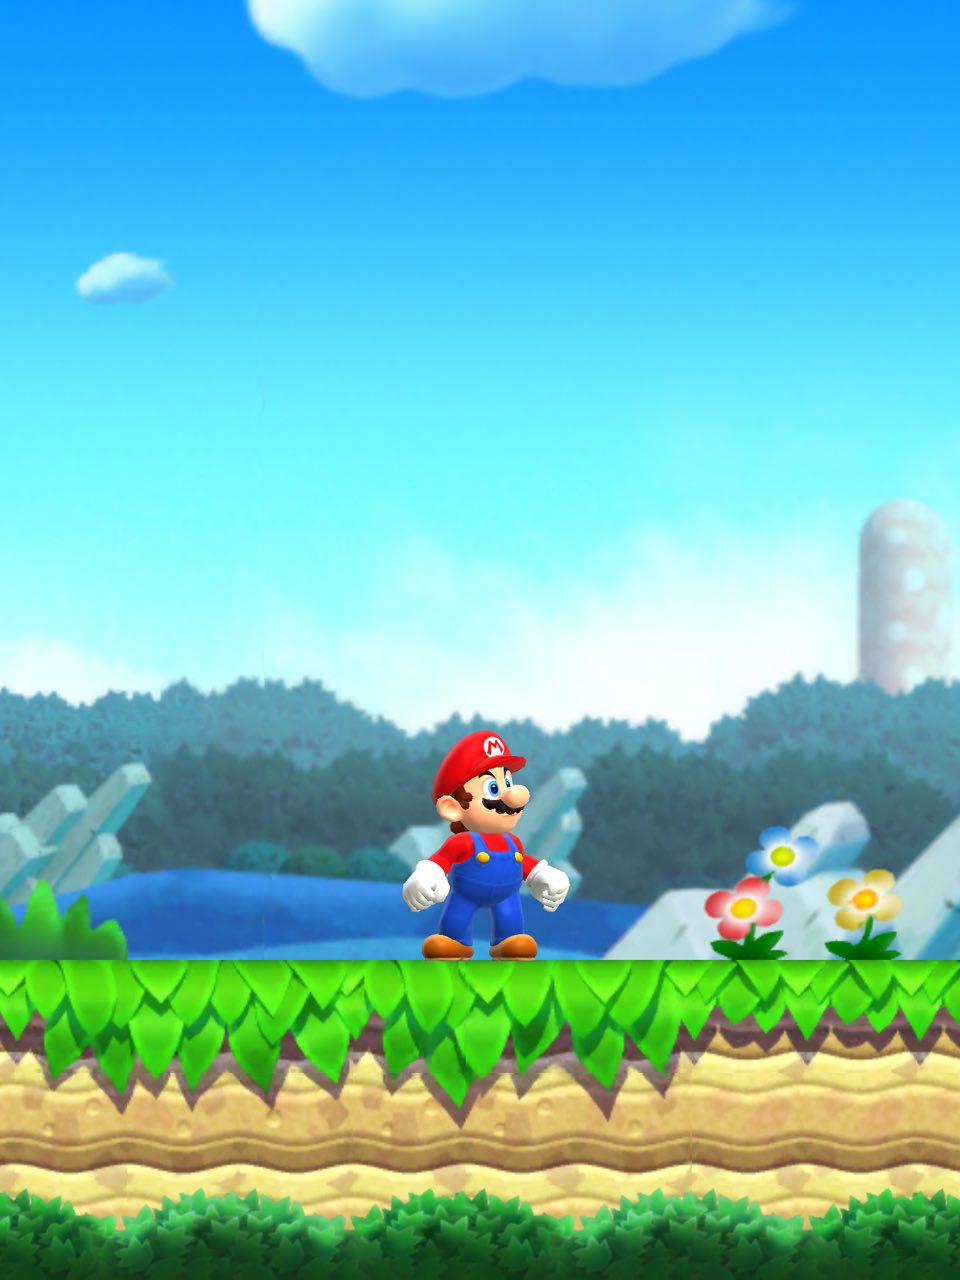 Super Mario Run, Nintendo отлично работает на iPhone 6